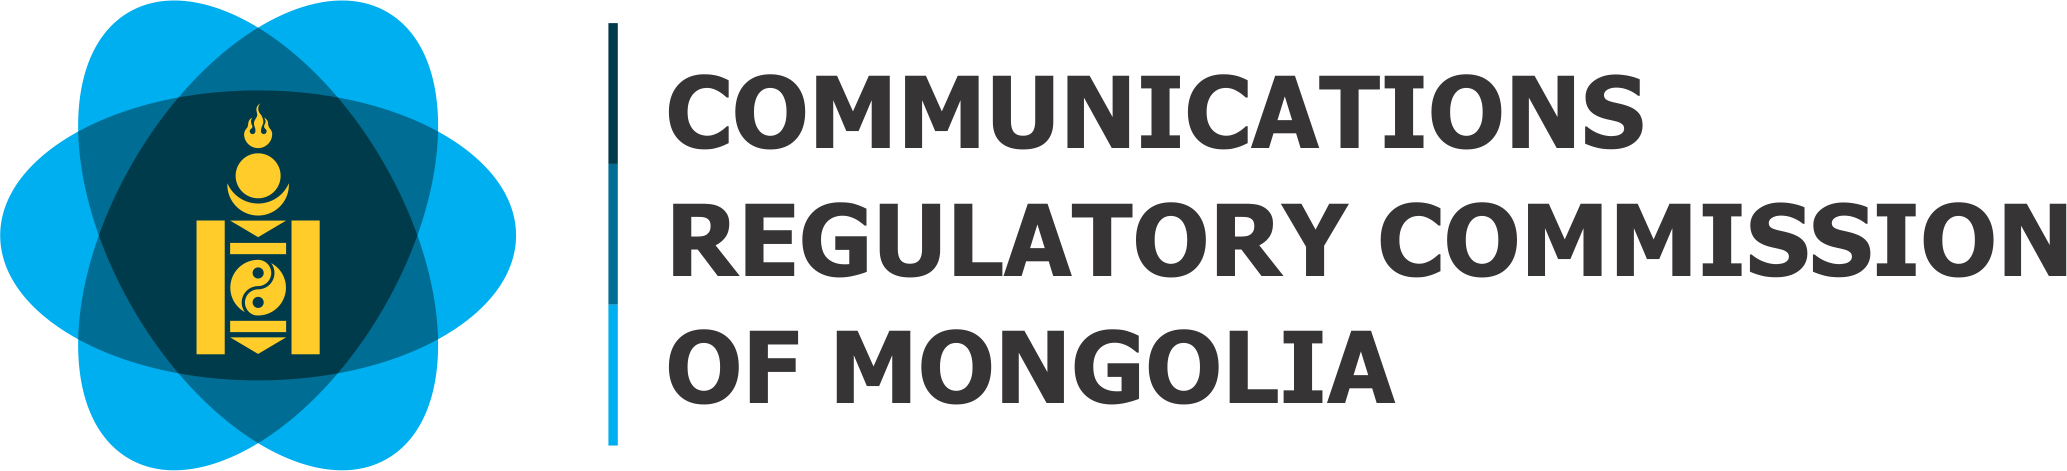 Харилцаа холбооны Зохицуулах Хороо||COMMUNICATIONS REGULATORY COMMISSION OF MONGOLIA